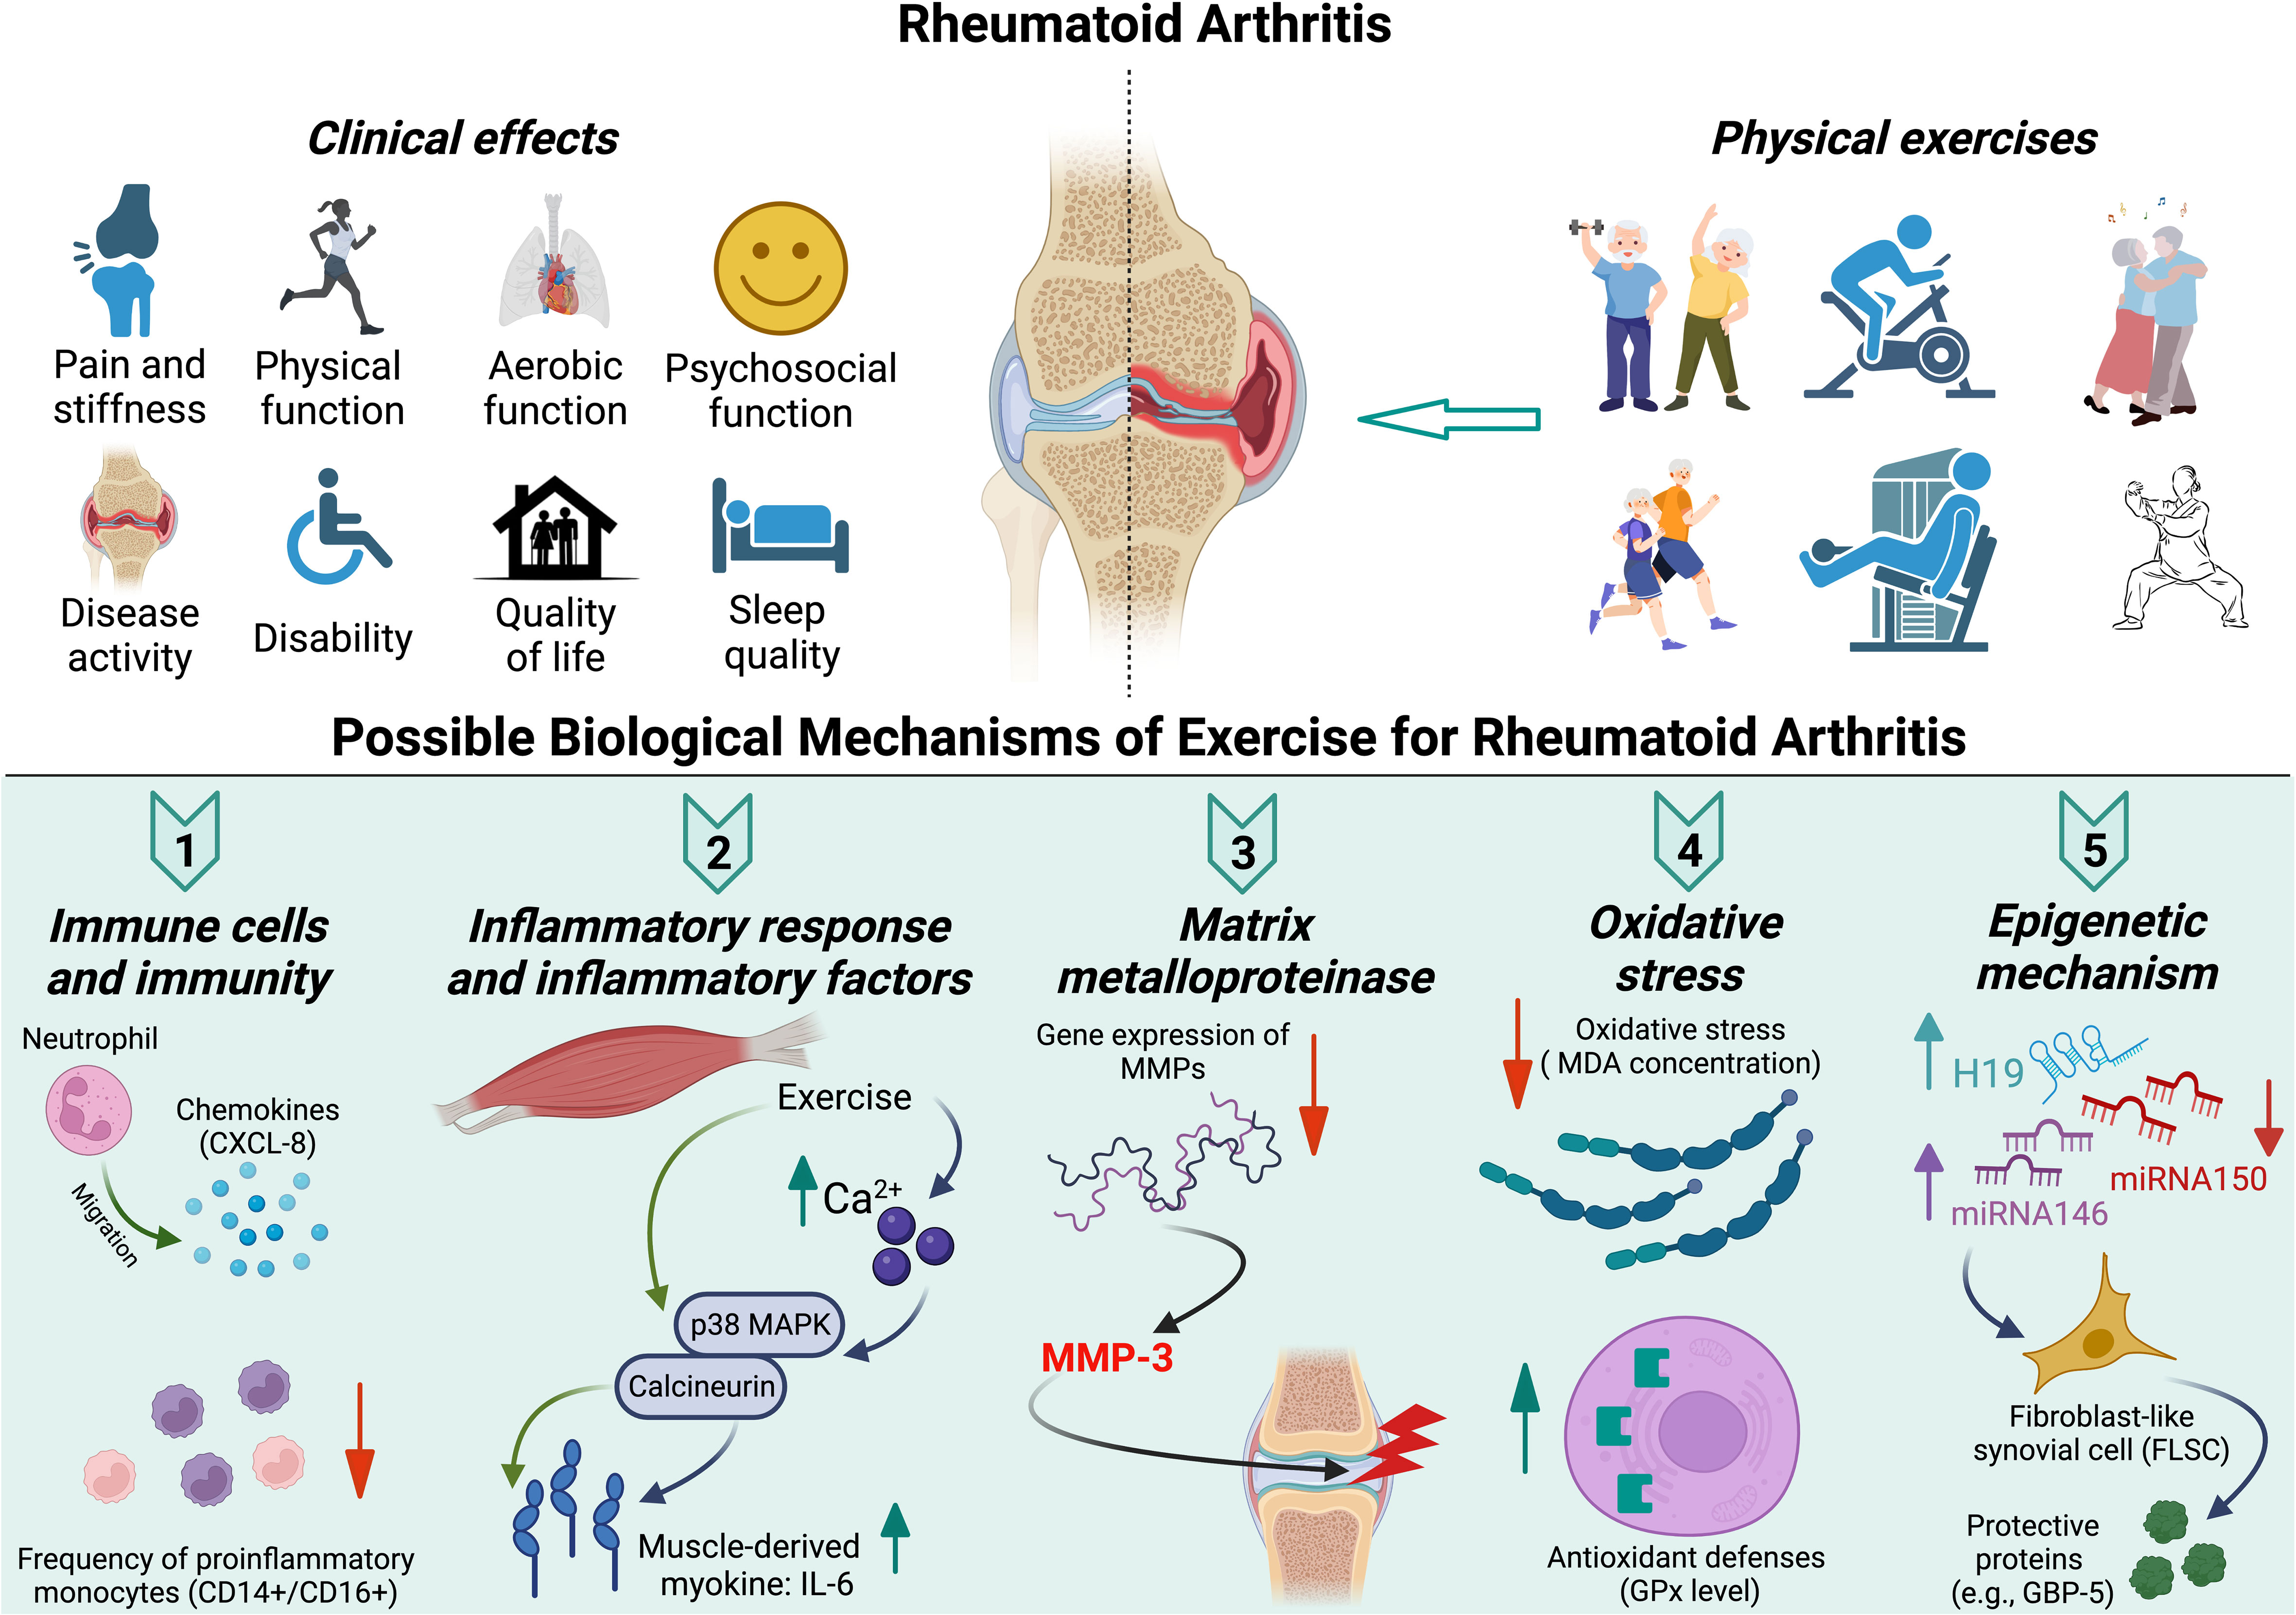 The Latest Research on Treating Rheumatoid Arthritis - Mechanism of action